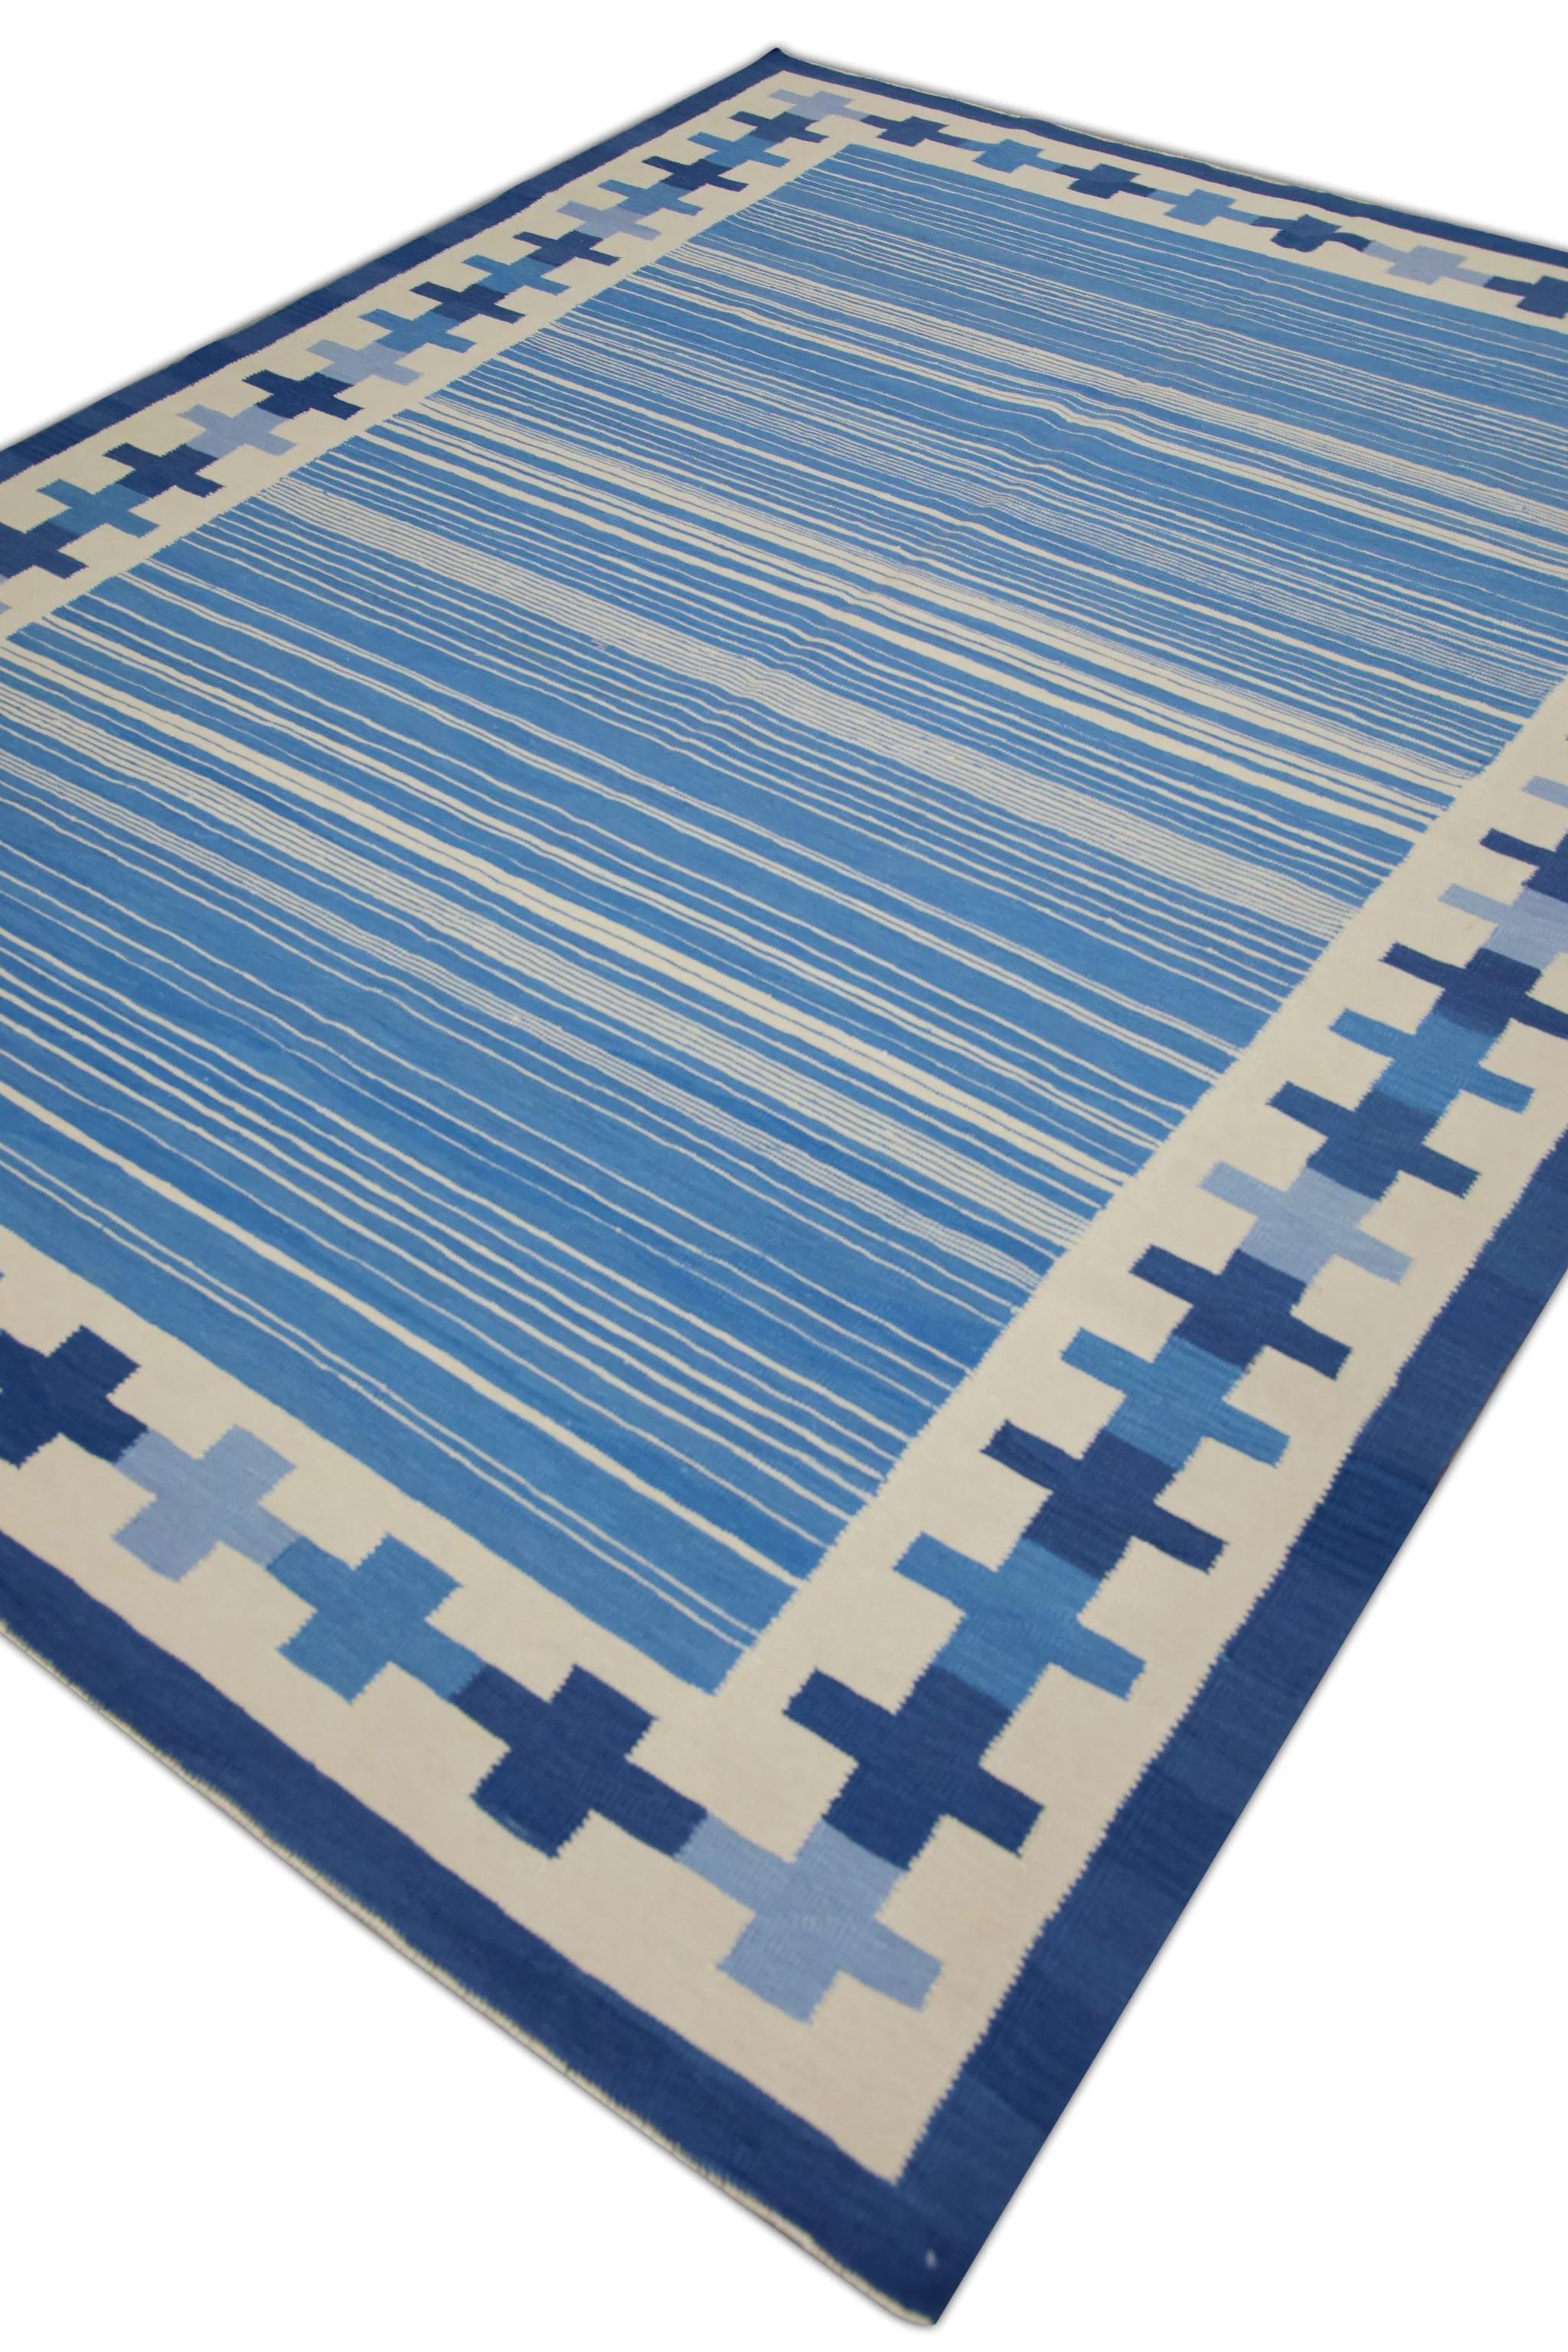 Contemporary Blue Geometric Design Flatweave Handmade Wool Rug 8' X 10'6